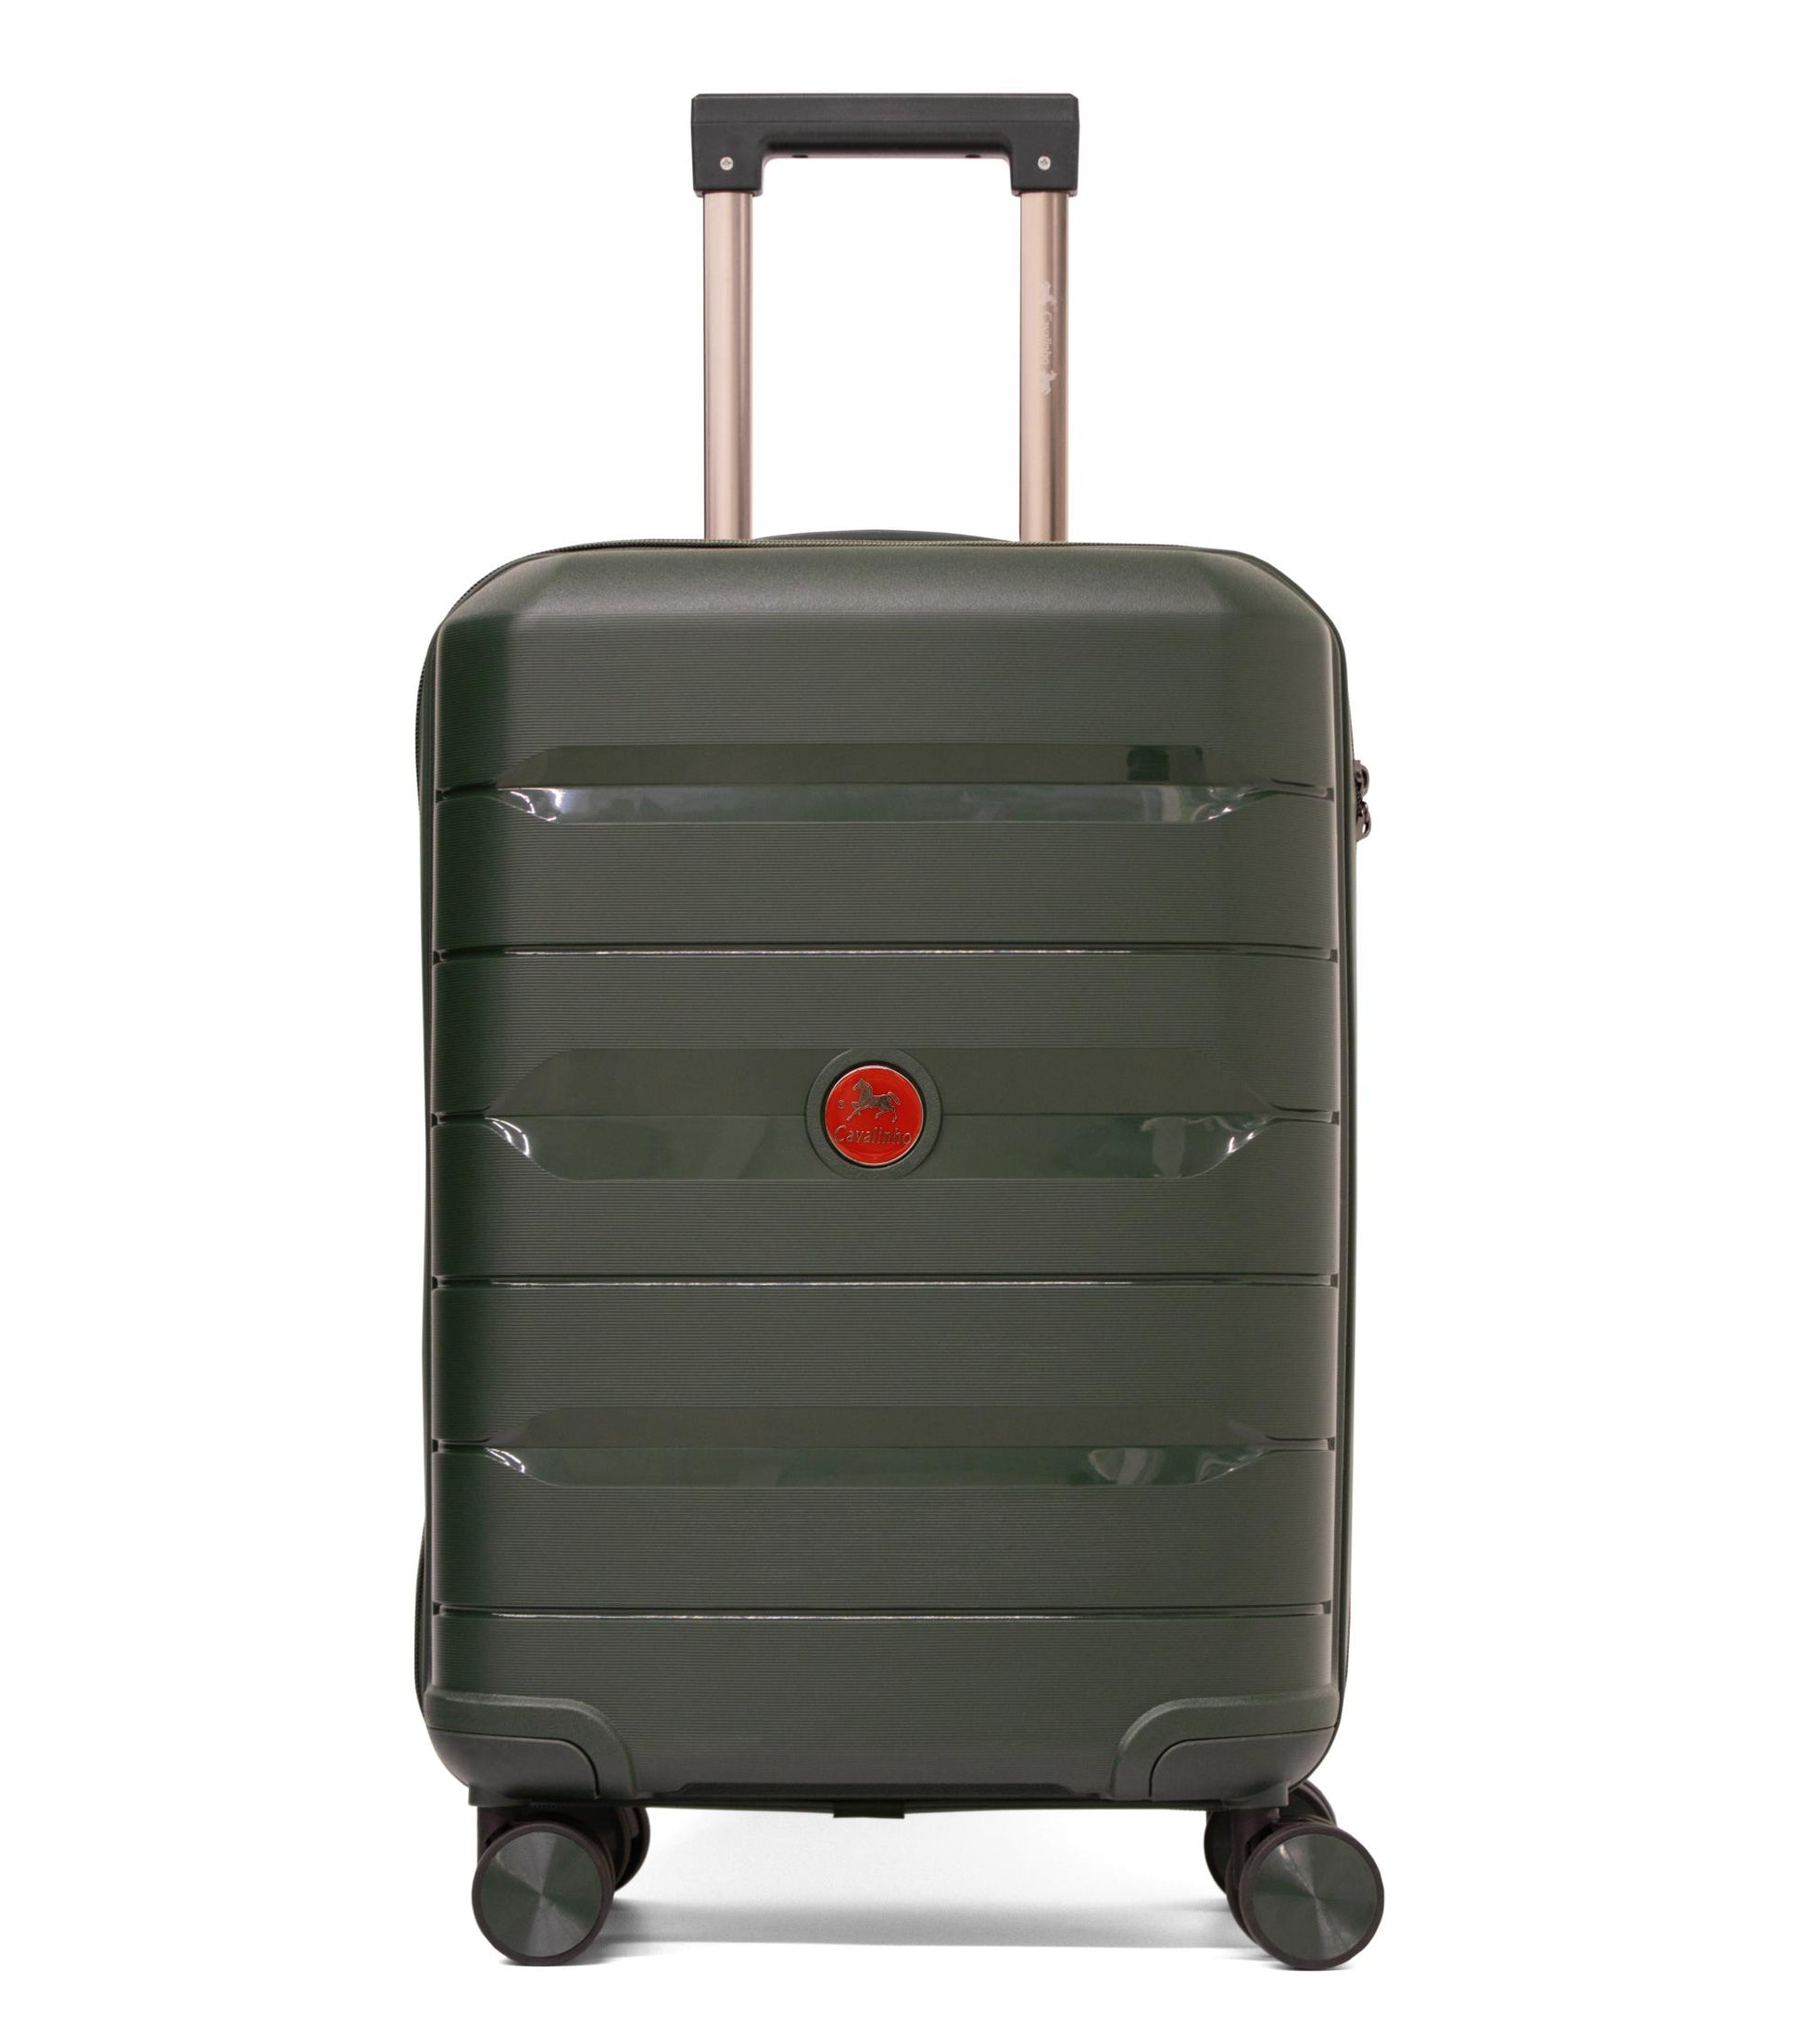 Cavalinho Oasis Carry-on Hardside Luggage (20") - 20 inch DarkOliveGreen - 68040001.09.20_1